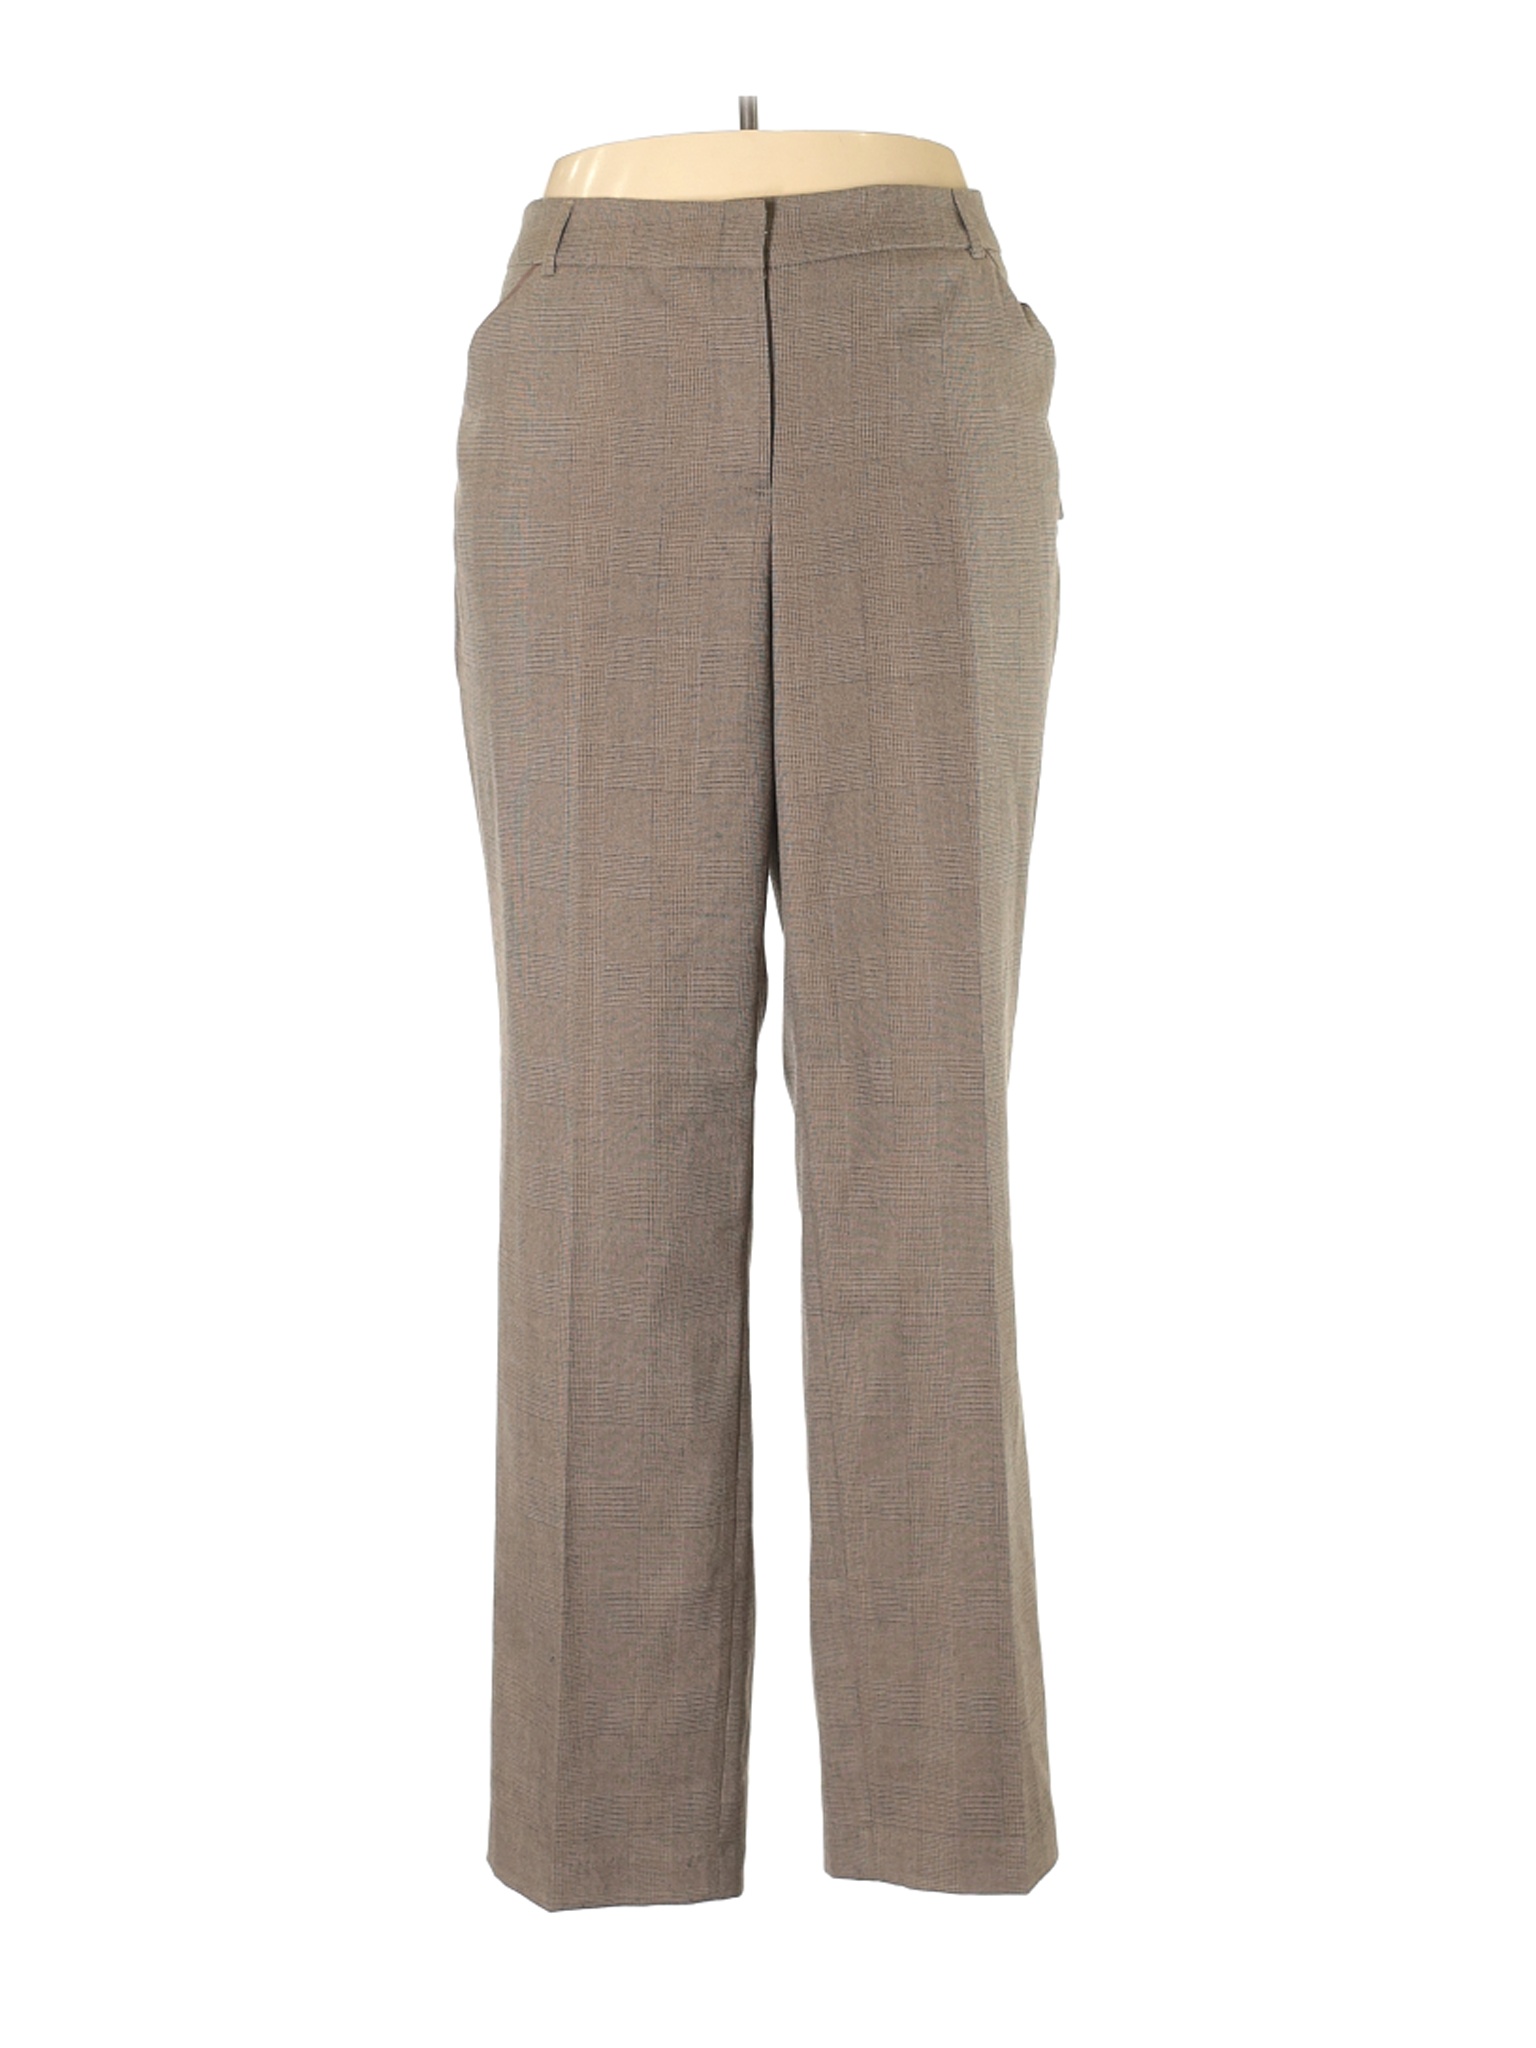 NWT Dalia Collection Women Brown Dress Pants 16 | eBay